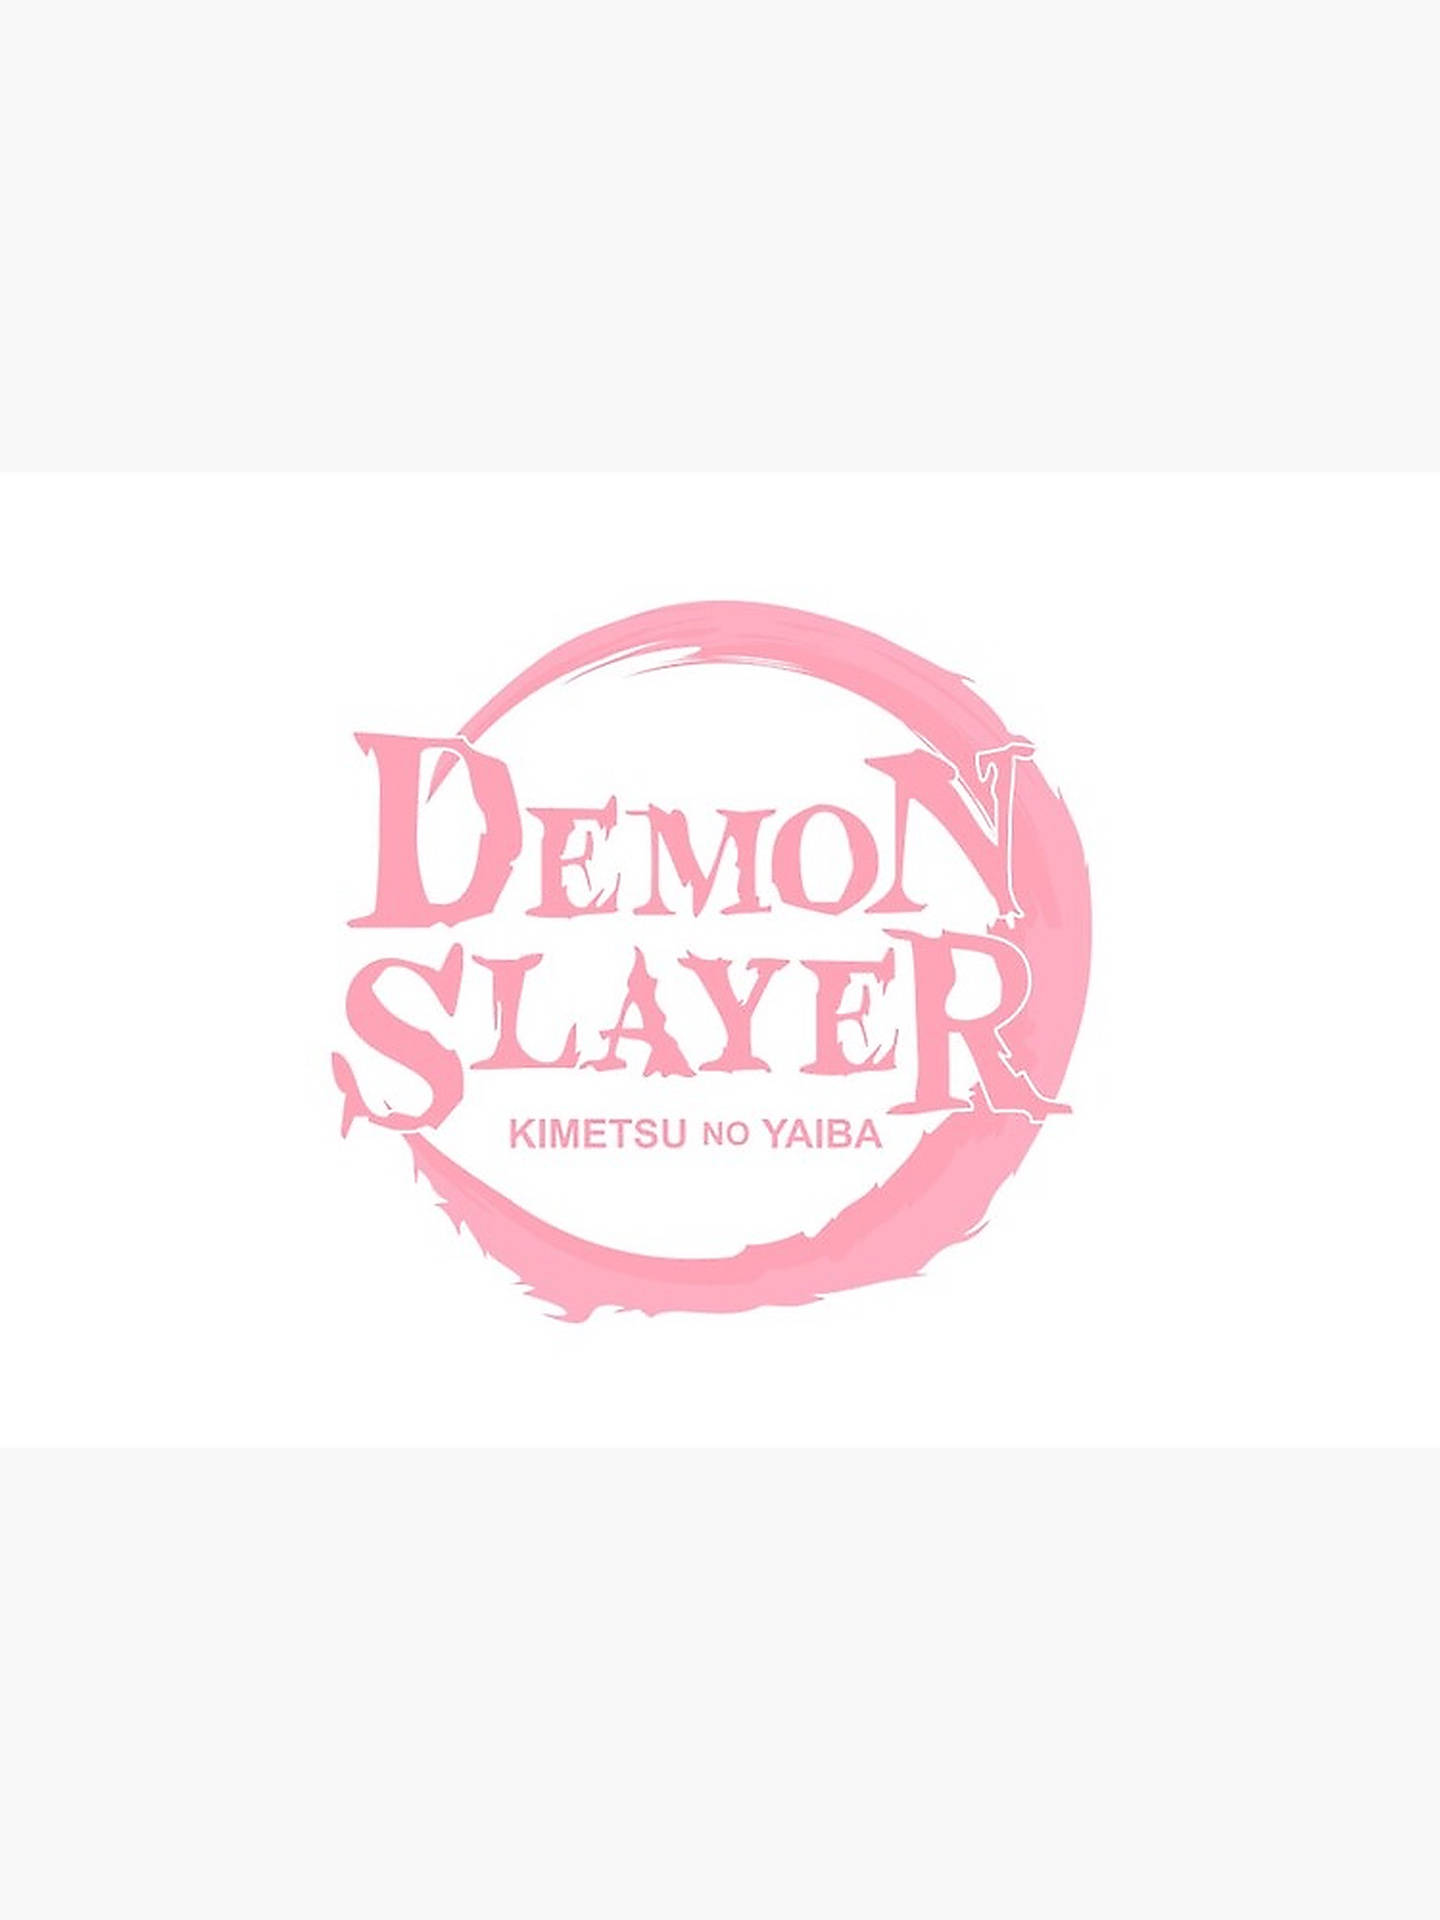 Pink Demon Slayer Logo Wallpaper